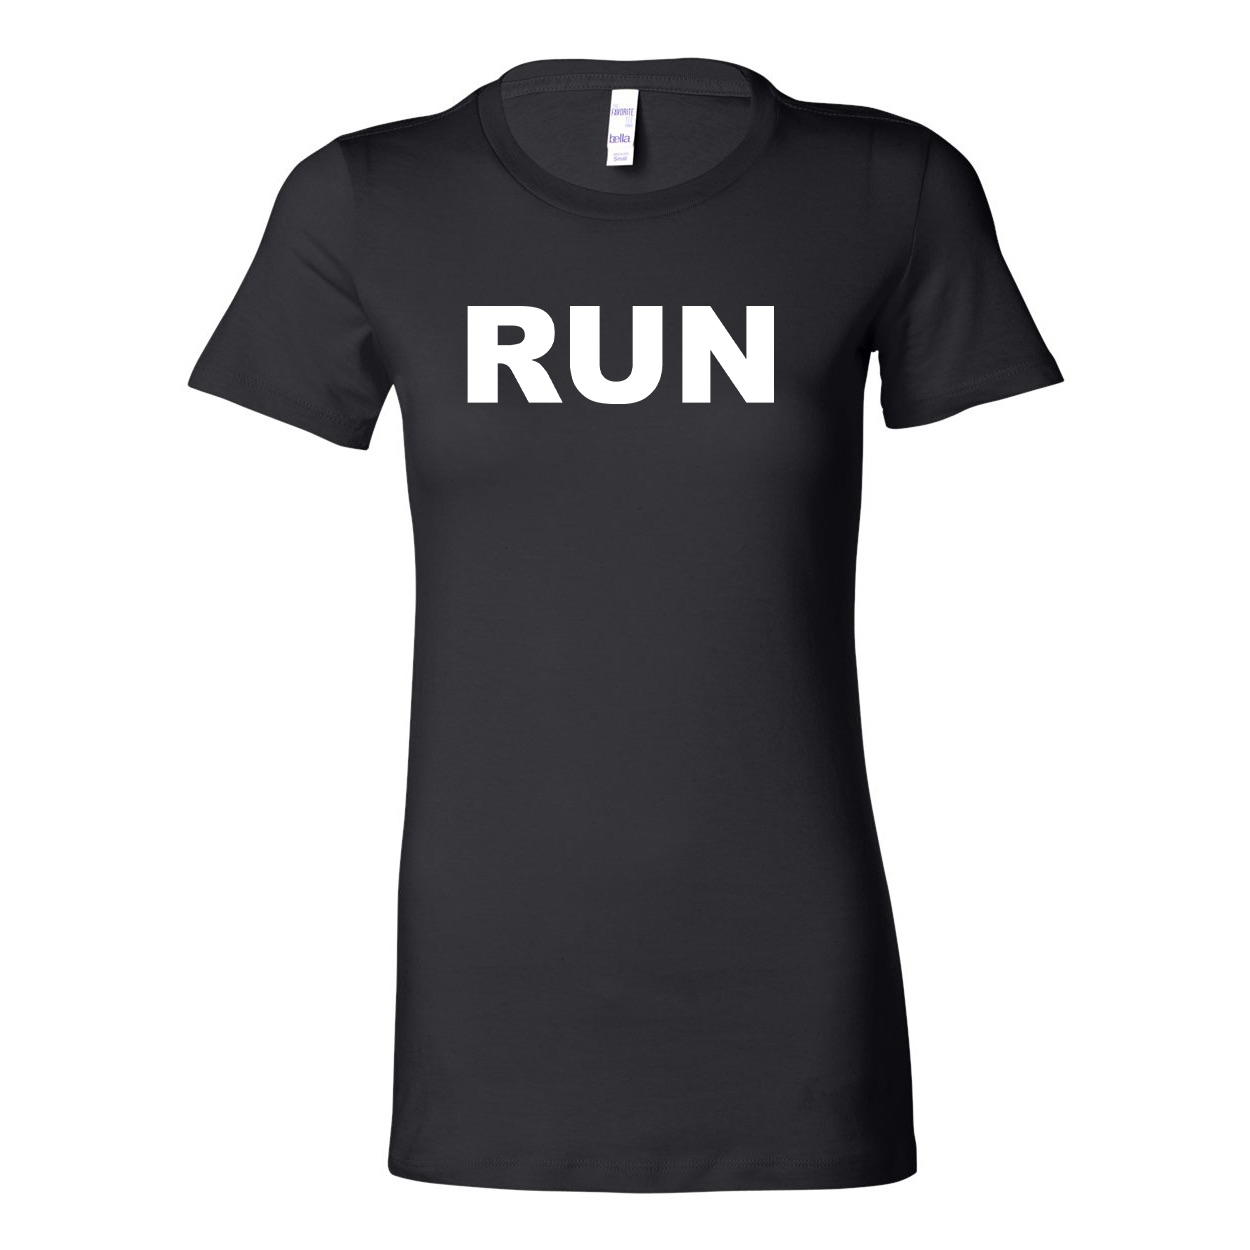 Run Brand Logo Classic Women's Fitted Tri-Blend T-Shirt Black (White Logo)